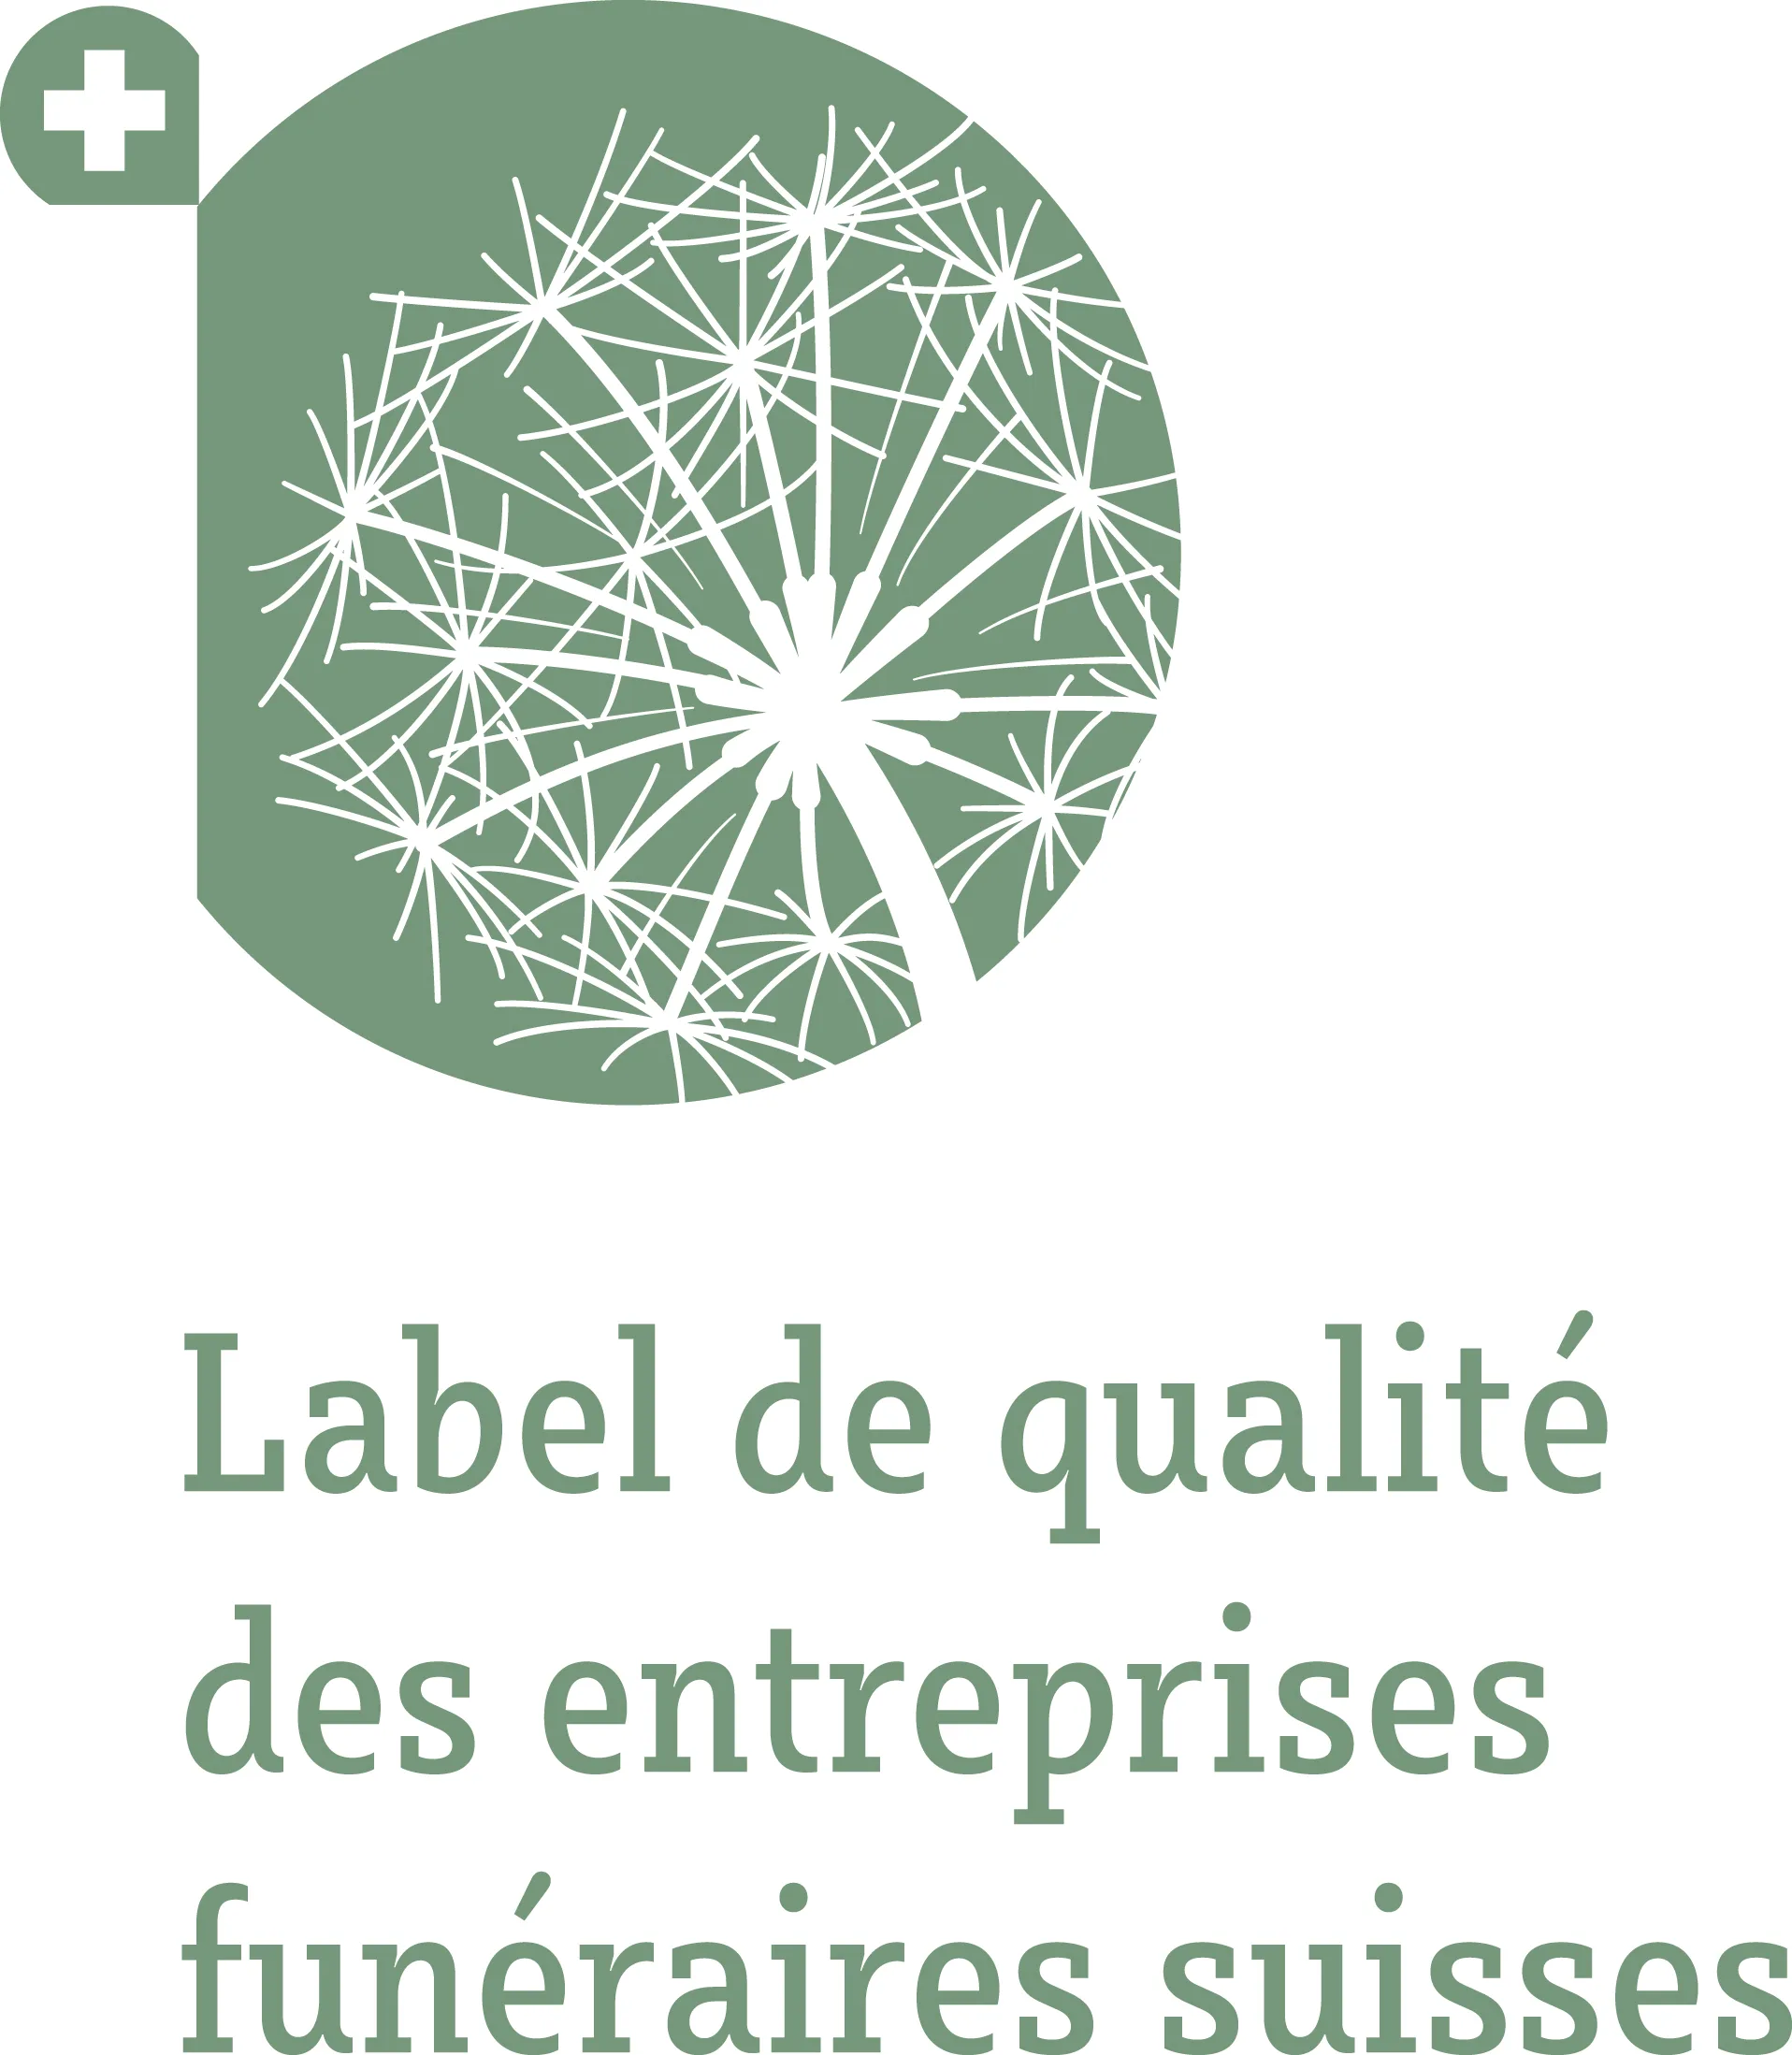 Schweiz. Verband der Bestattungsdienste Le logo du label de qualité des entreprises furnaiers suisse.